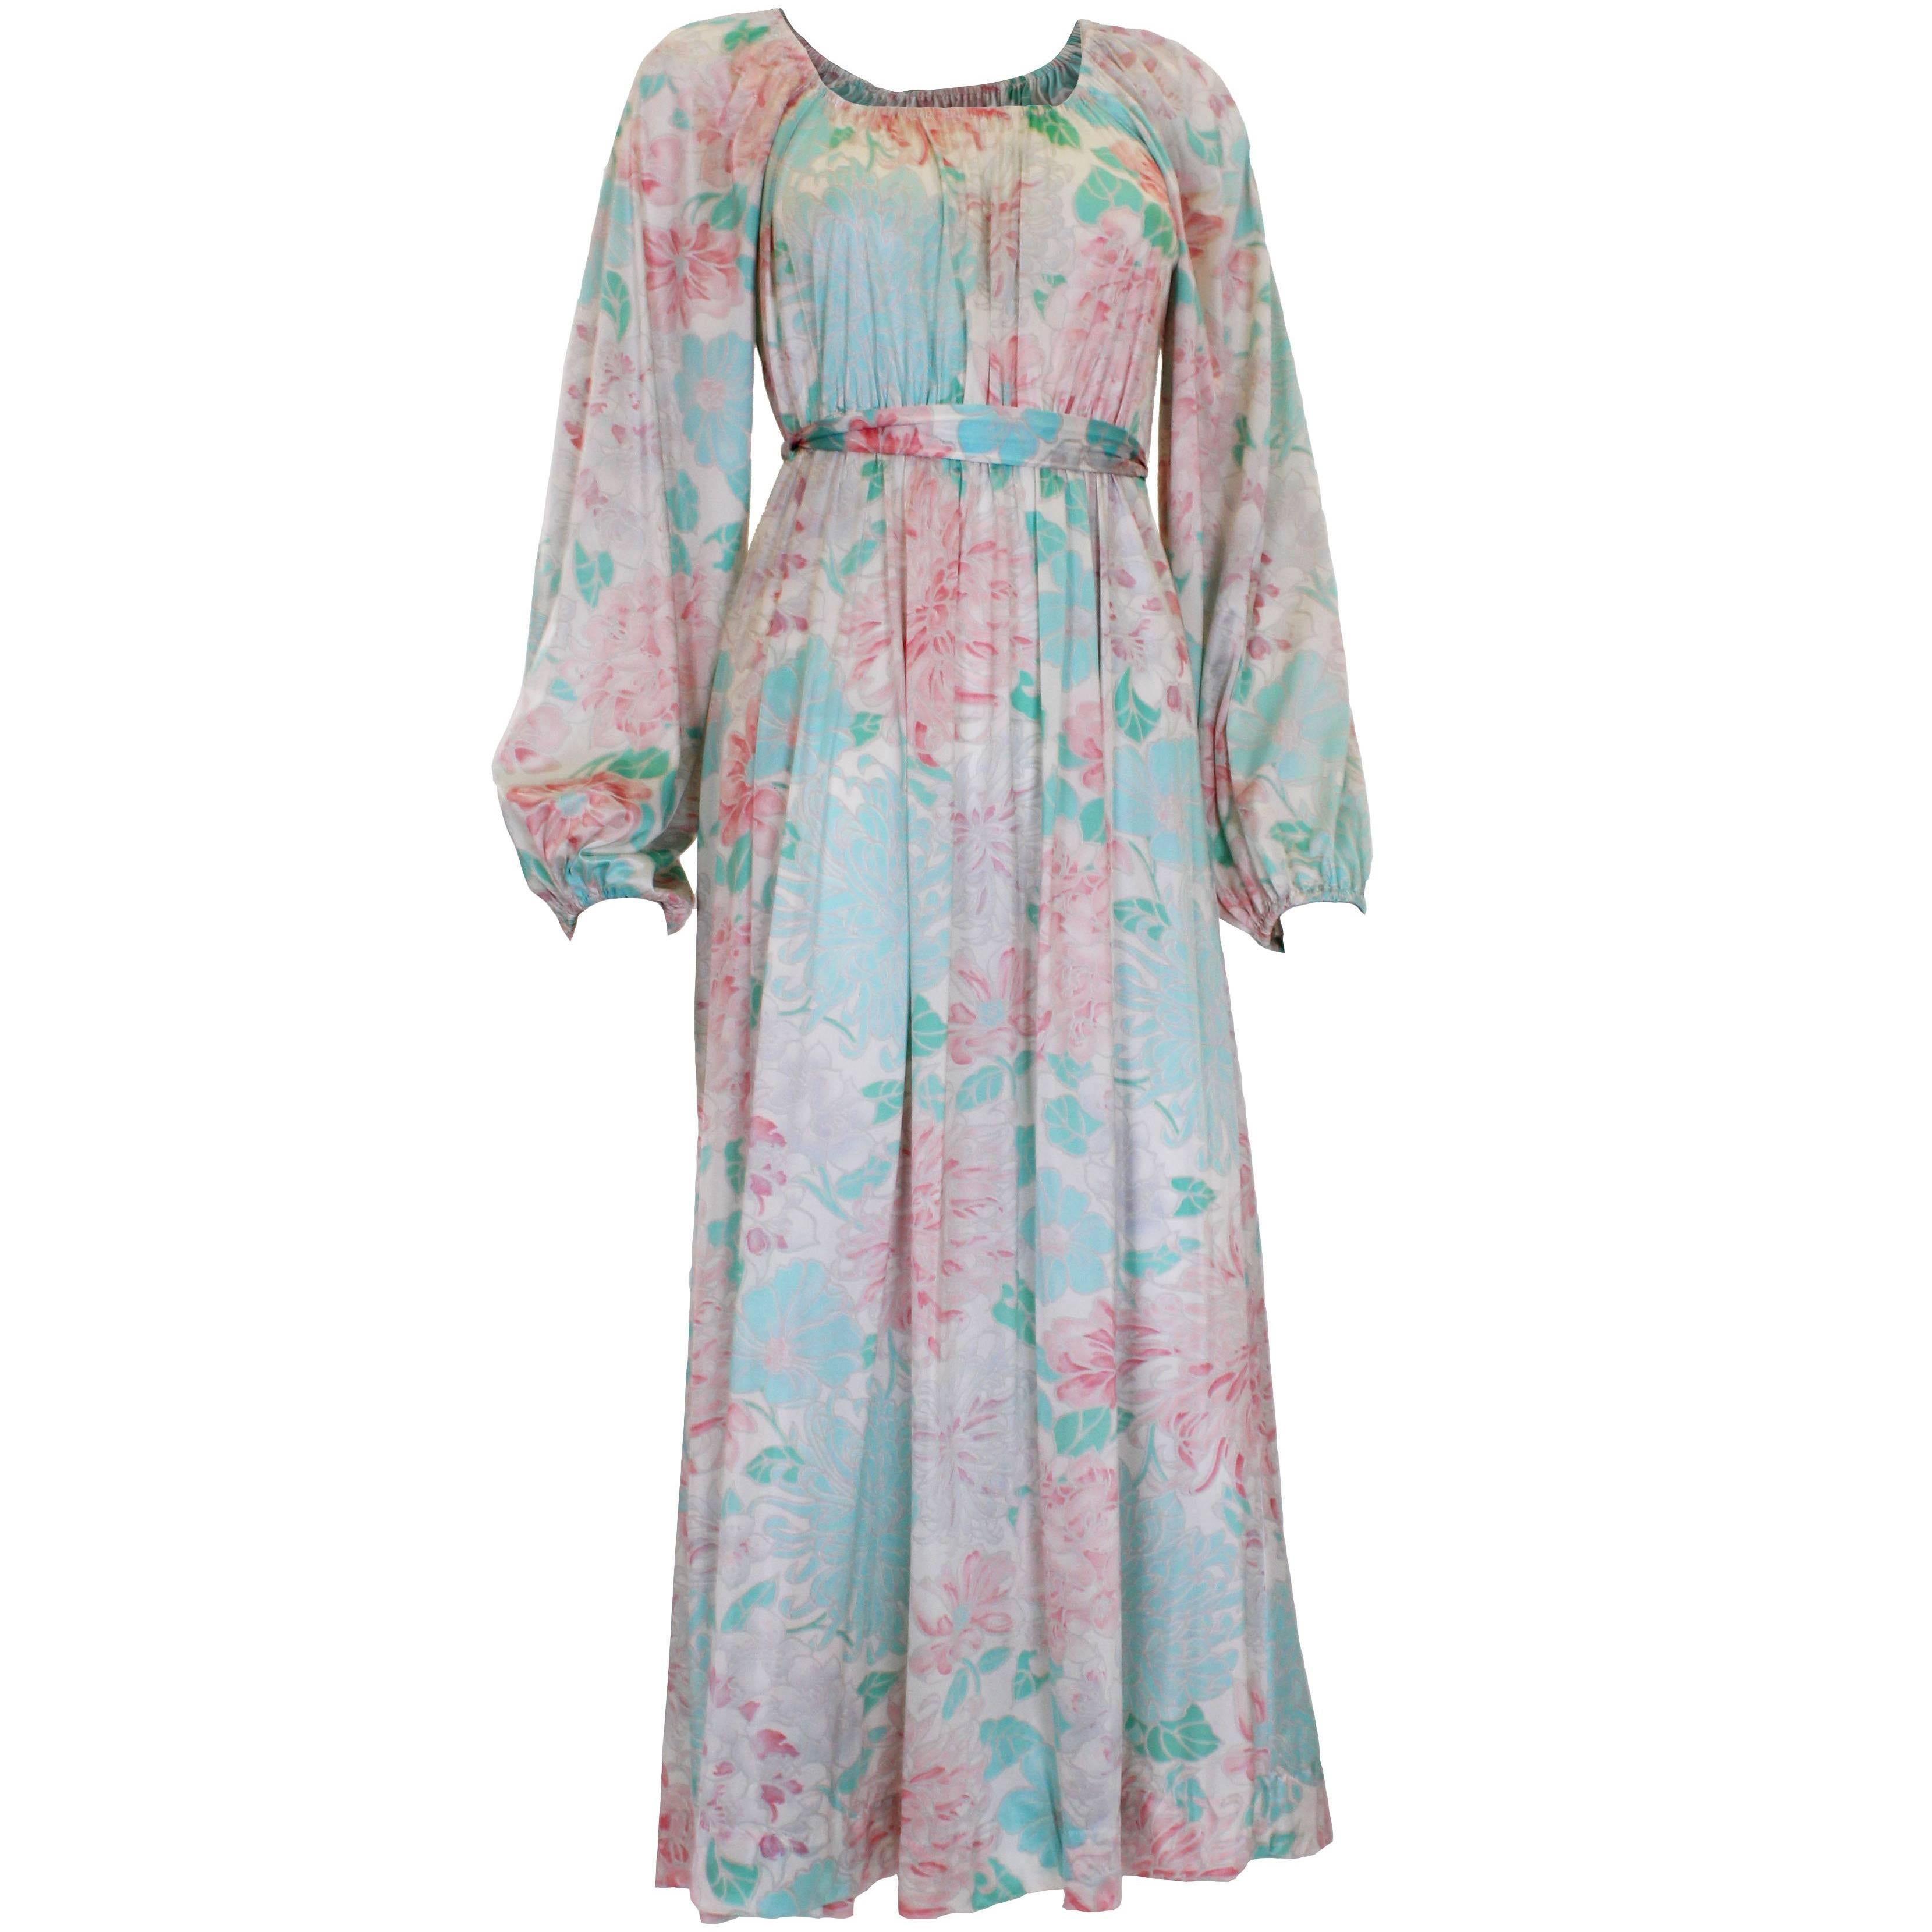 1970s Pastel Coloured Floral Print Jersey Dress